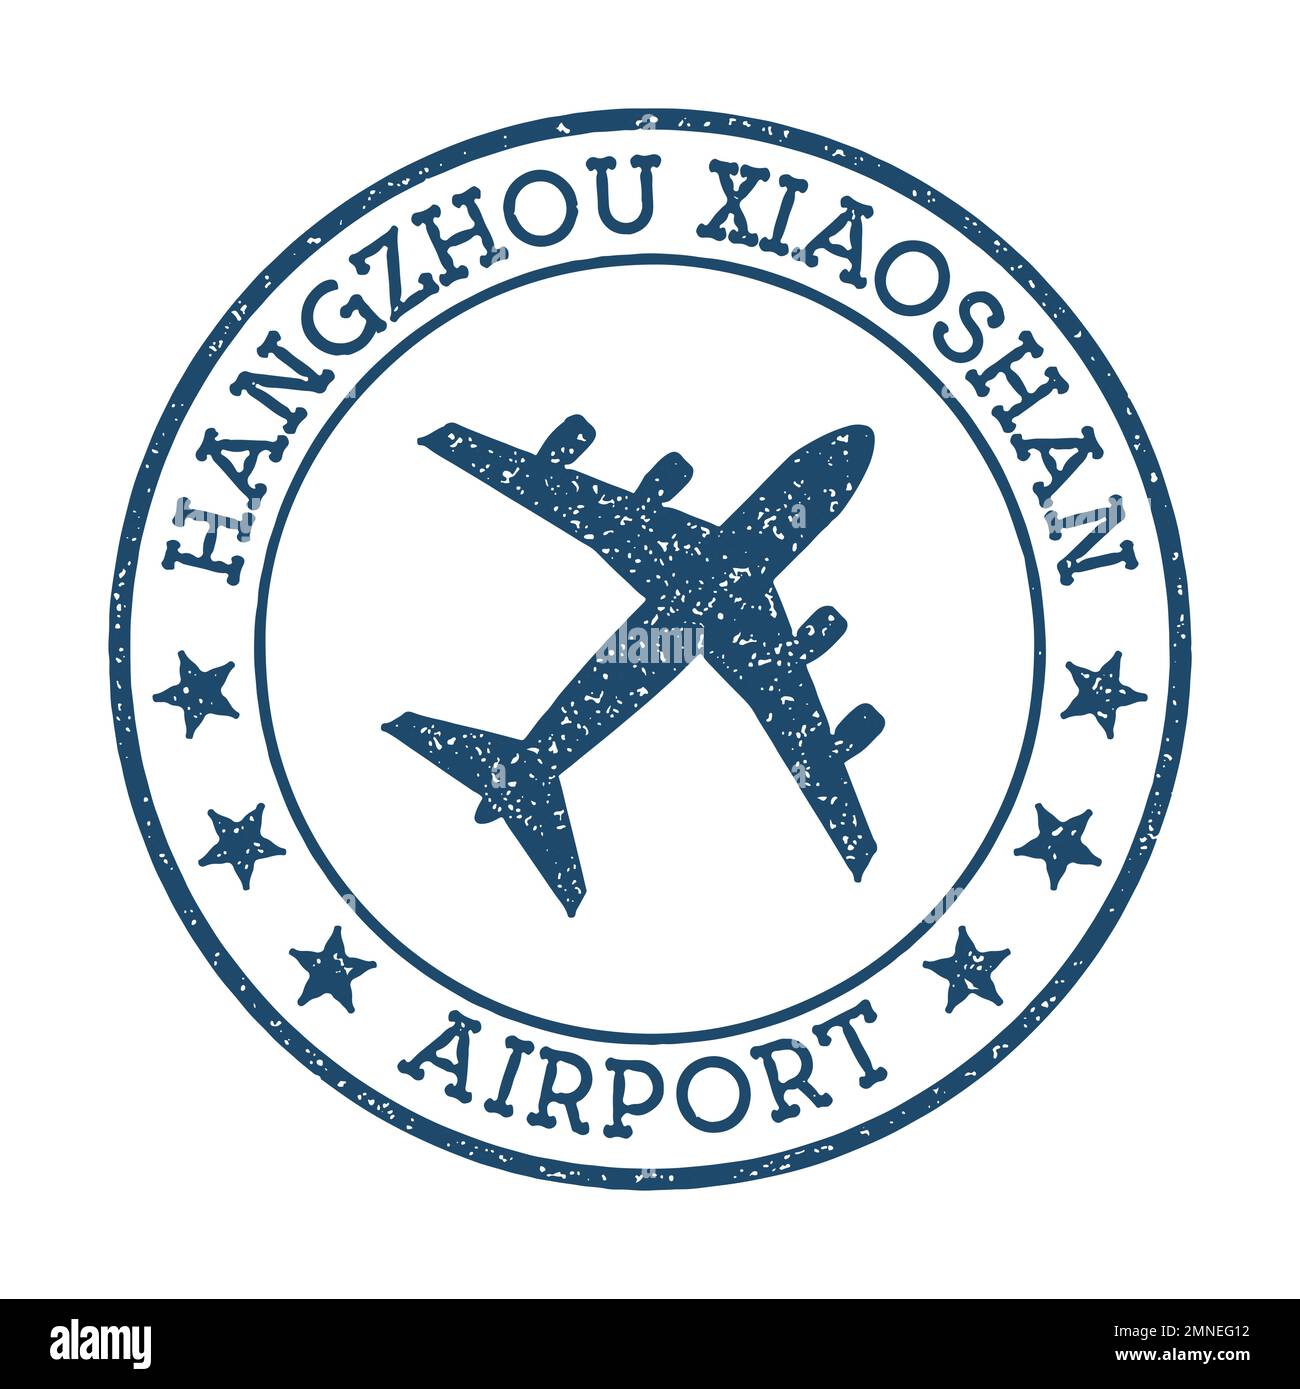 Hangzhou Xiaoshan Airport logo. Airport stamp vector illustration. Hangzhou aerodrome. Stock Vector